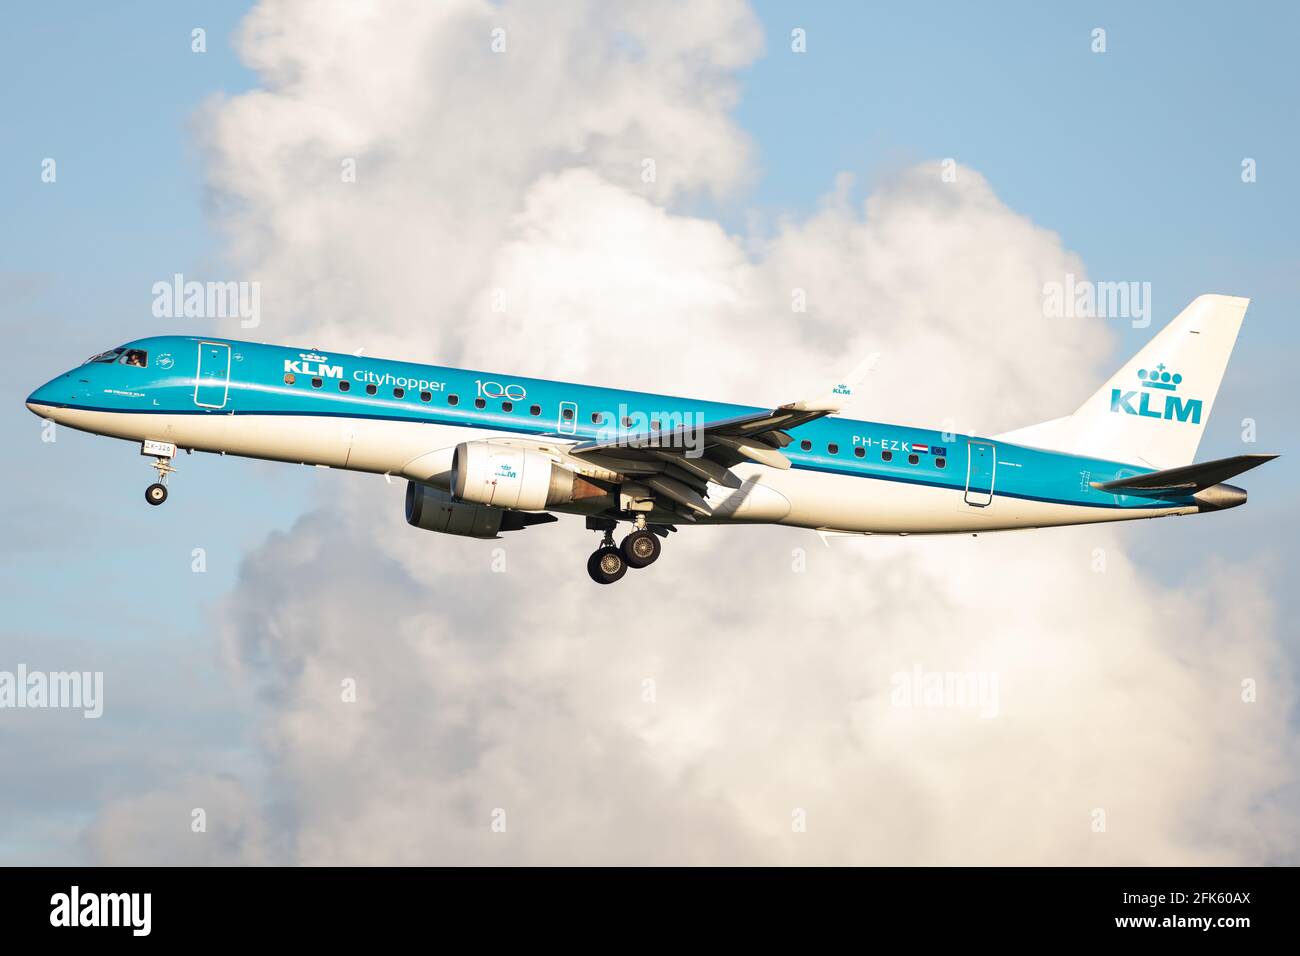 AMSTERDAM, NIEDERLANDE – 12. September 2020: KLM (KL / KLM) nähert sich dem Flughafen Amsterdam Schiphol (EHAM/AMS) mit einem Embraer E190 (PH-EZK/19000326). Stockfoto